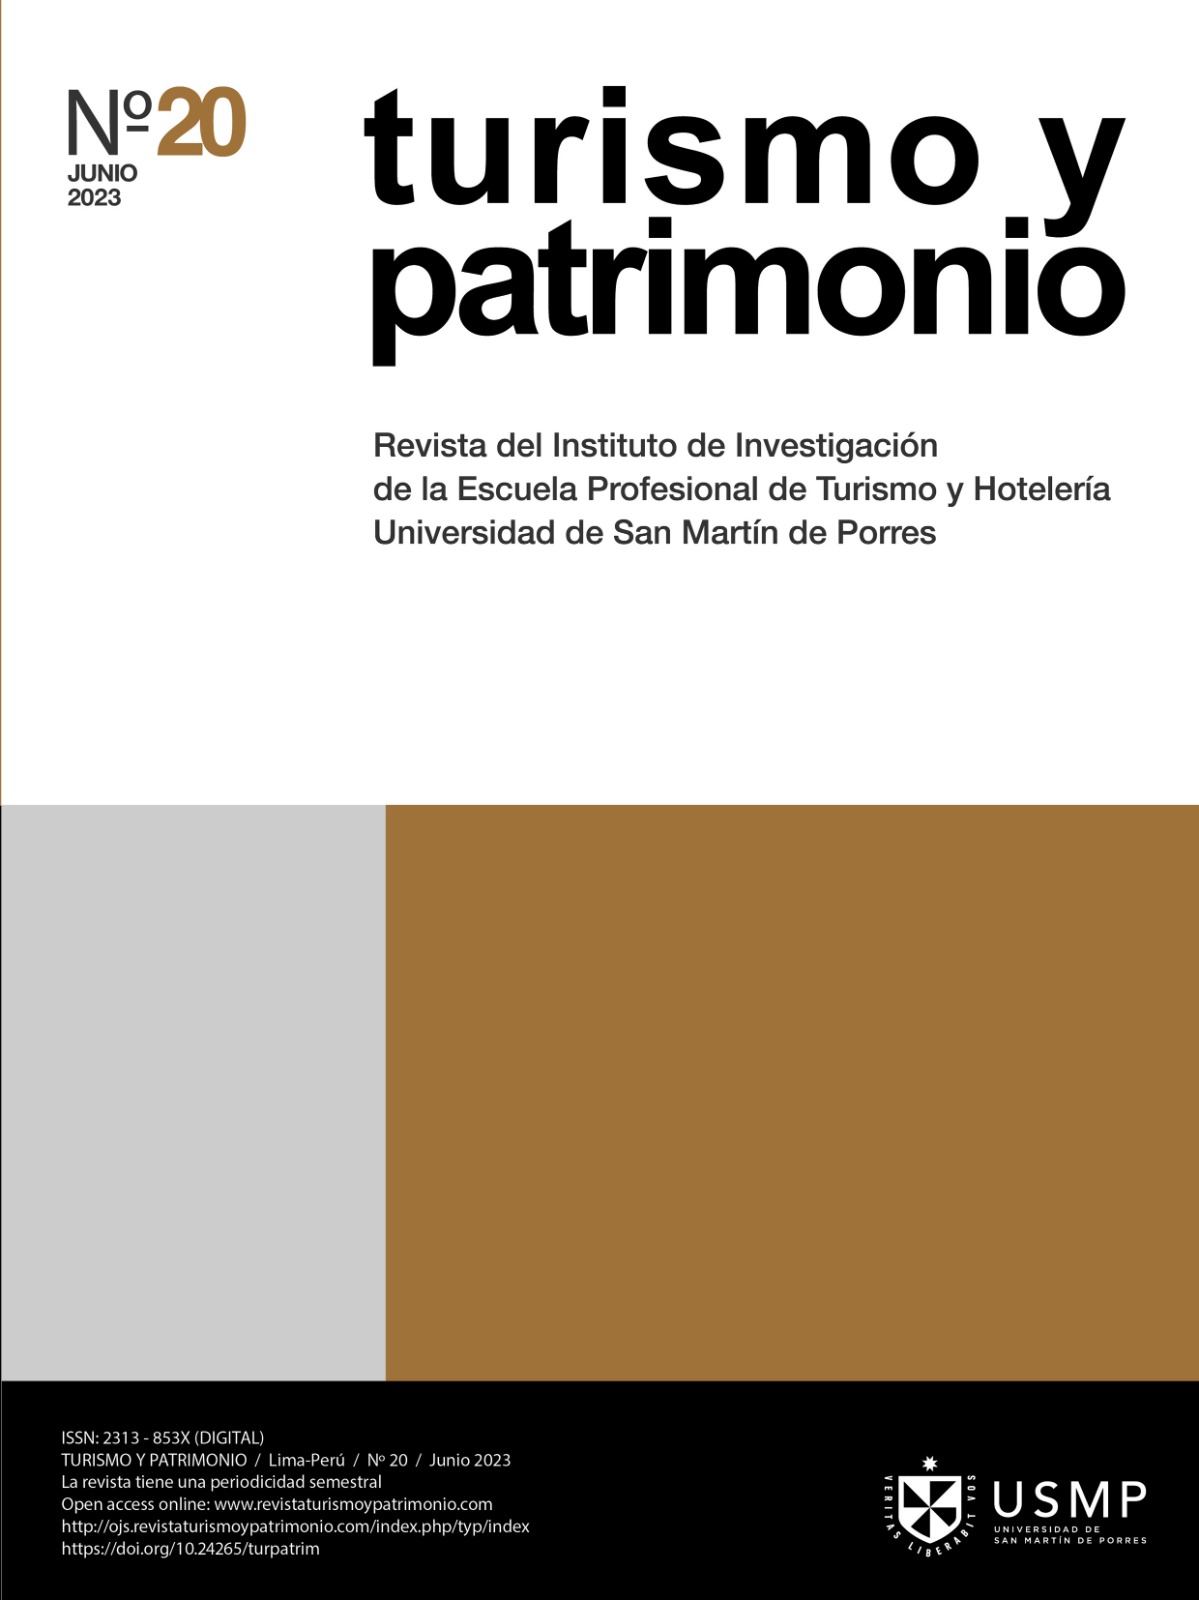 PASOS RTPC 9(4) by PASOS Revista de Turismo y Patrimonio Cultural - Issuu